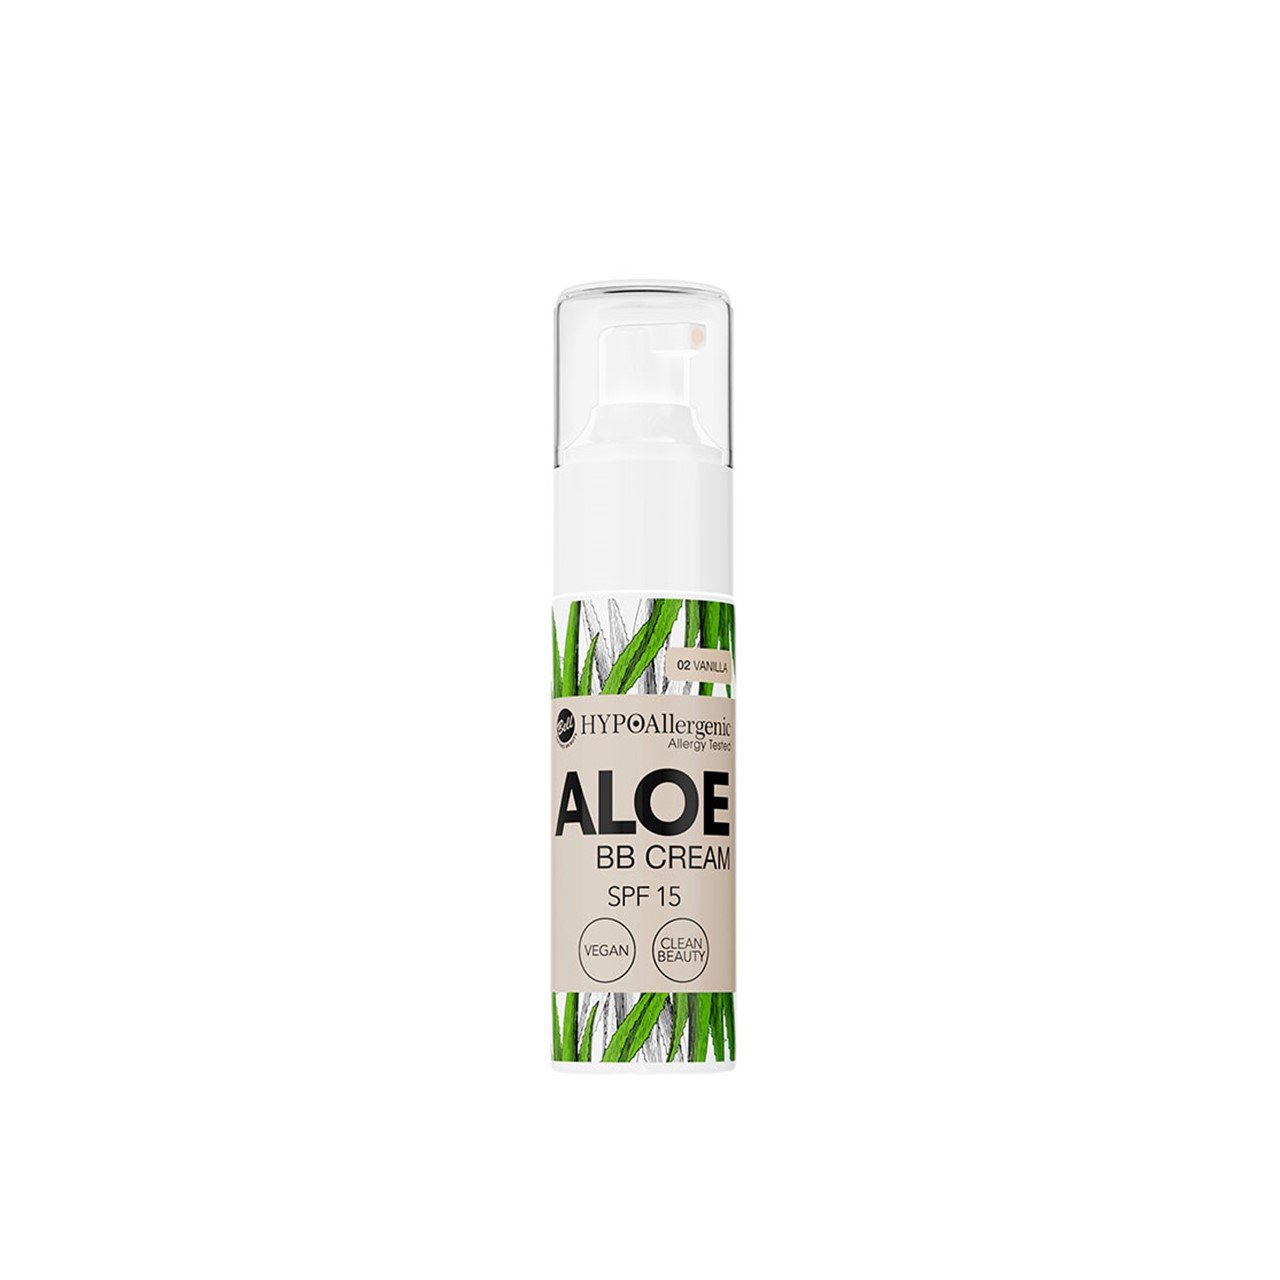 Bell HYPOAllergenic Aloe BB Cream SPF15 02 Vanilla 20g (0.71oz)